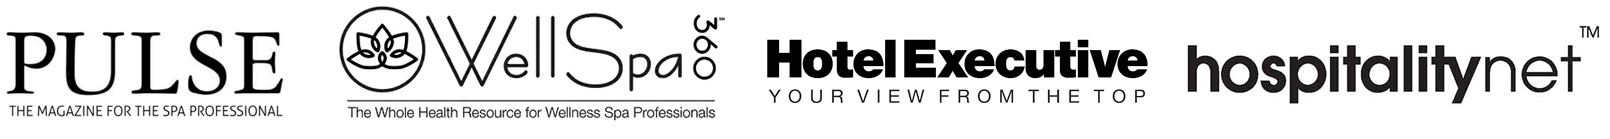 As Seen In Pulse, WellSpa 360, Hotel Executive, Hospitality Net